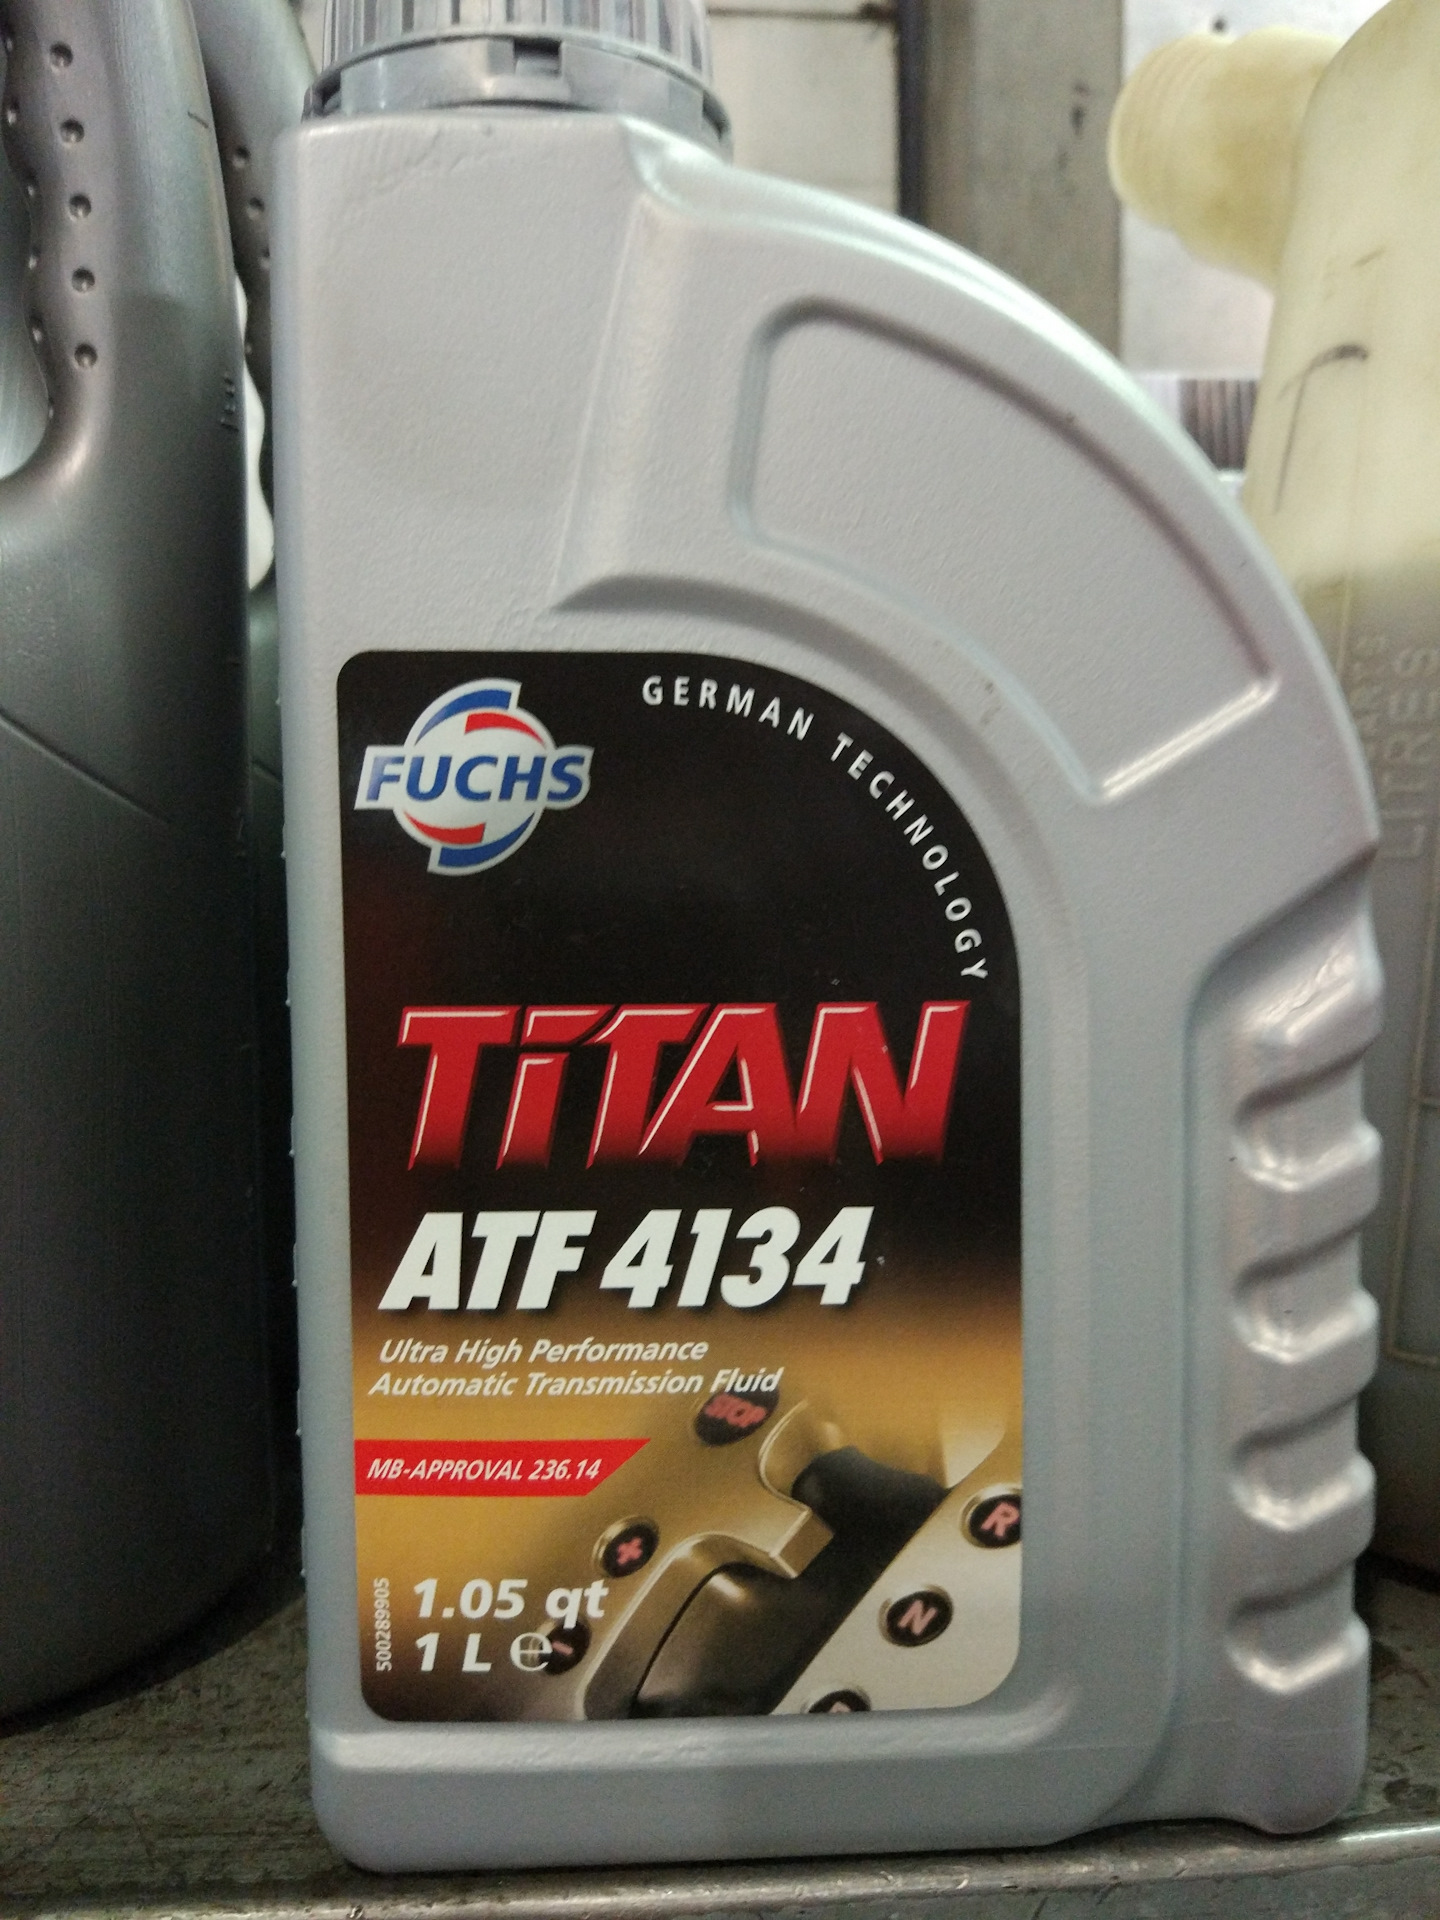 Atf 4134. Fuchs Titan ATF 4134. Titan ATF 4134 German Technology. ATF 4134 аналог. ATF 4134 (P.R.C.).